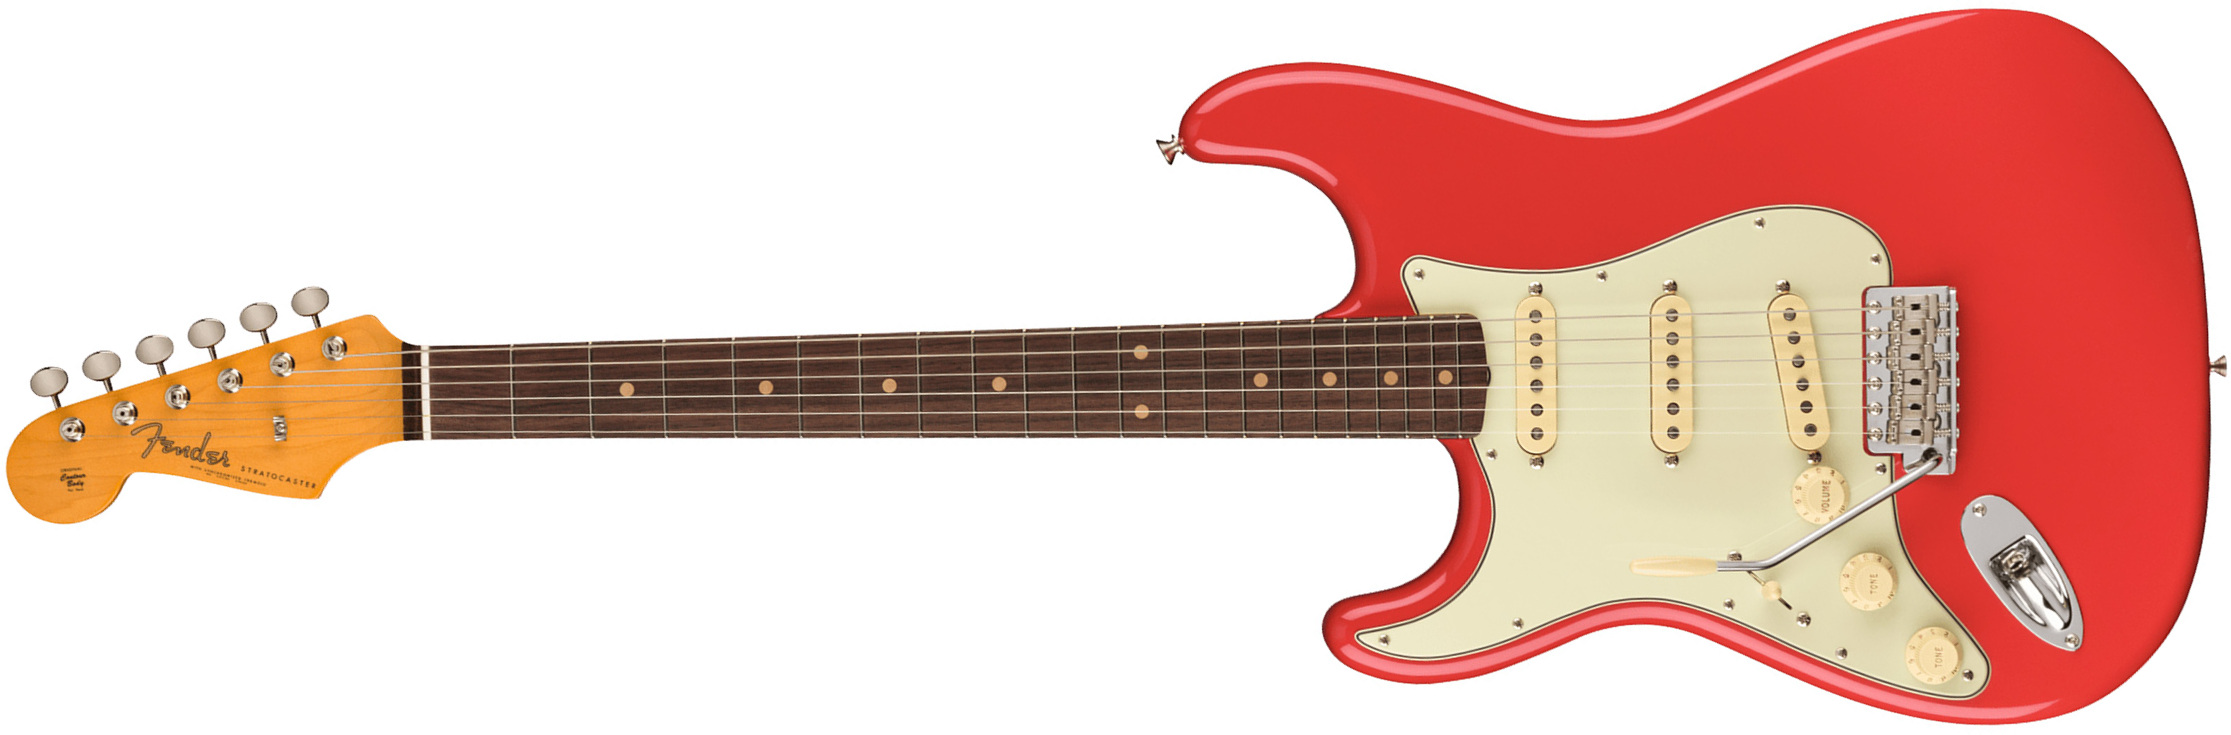 Fender Strat 1961 American Vintage Ii Lh Gaucher Usa 3s Trem Rw - Fiesta Red - Guitare Électrique Gaucher - Main picture